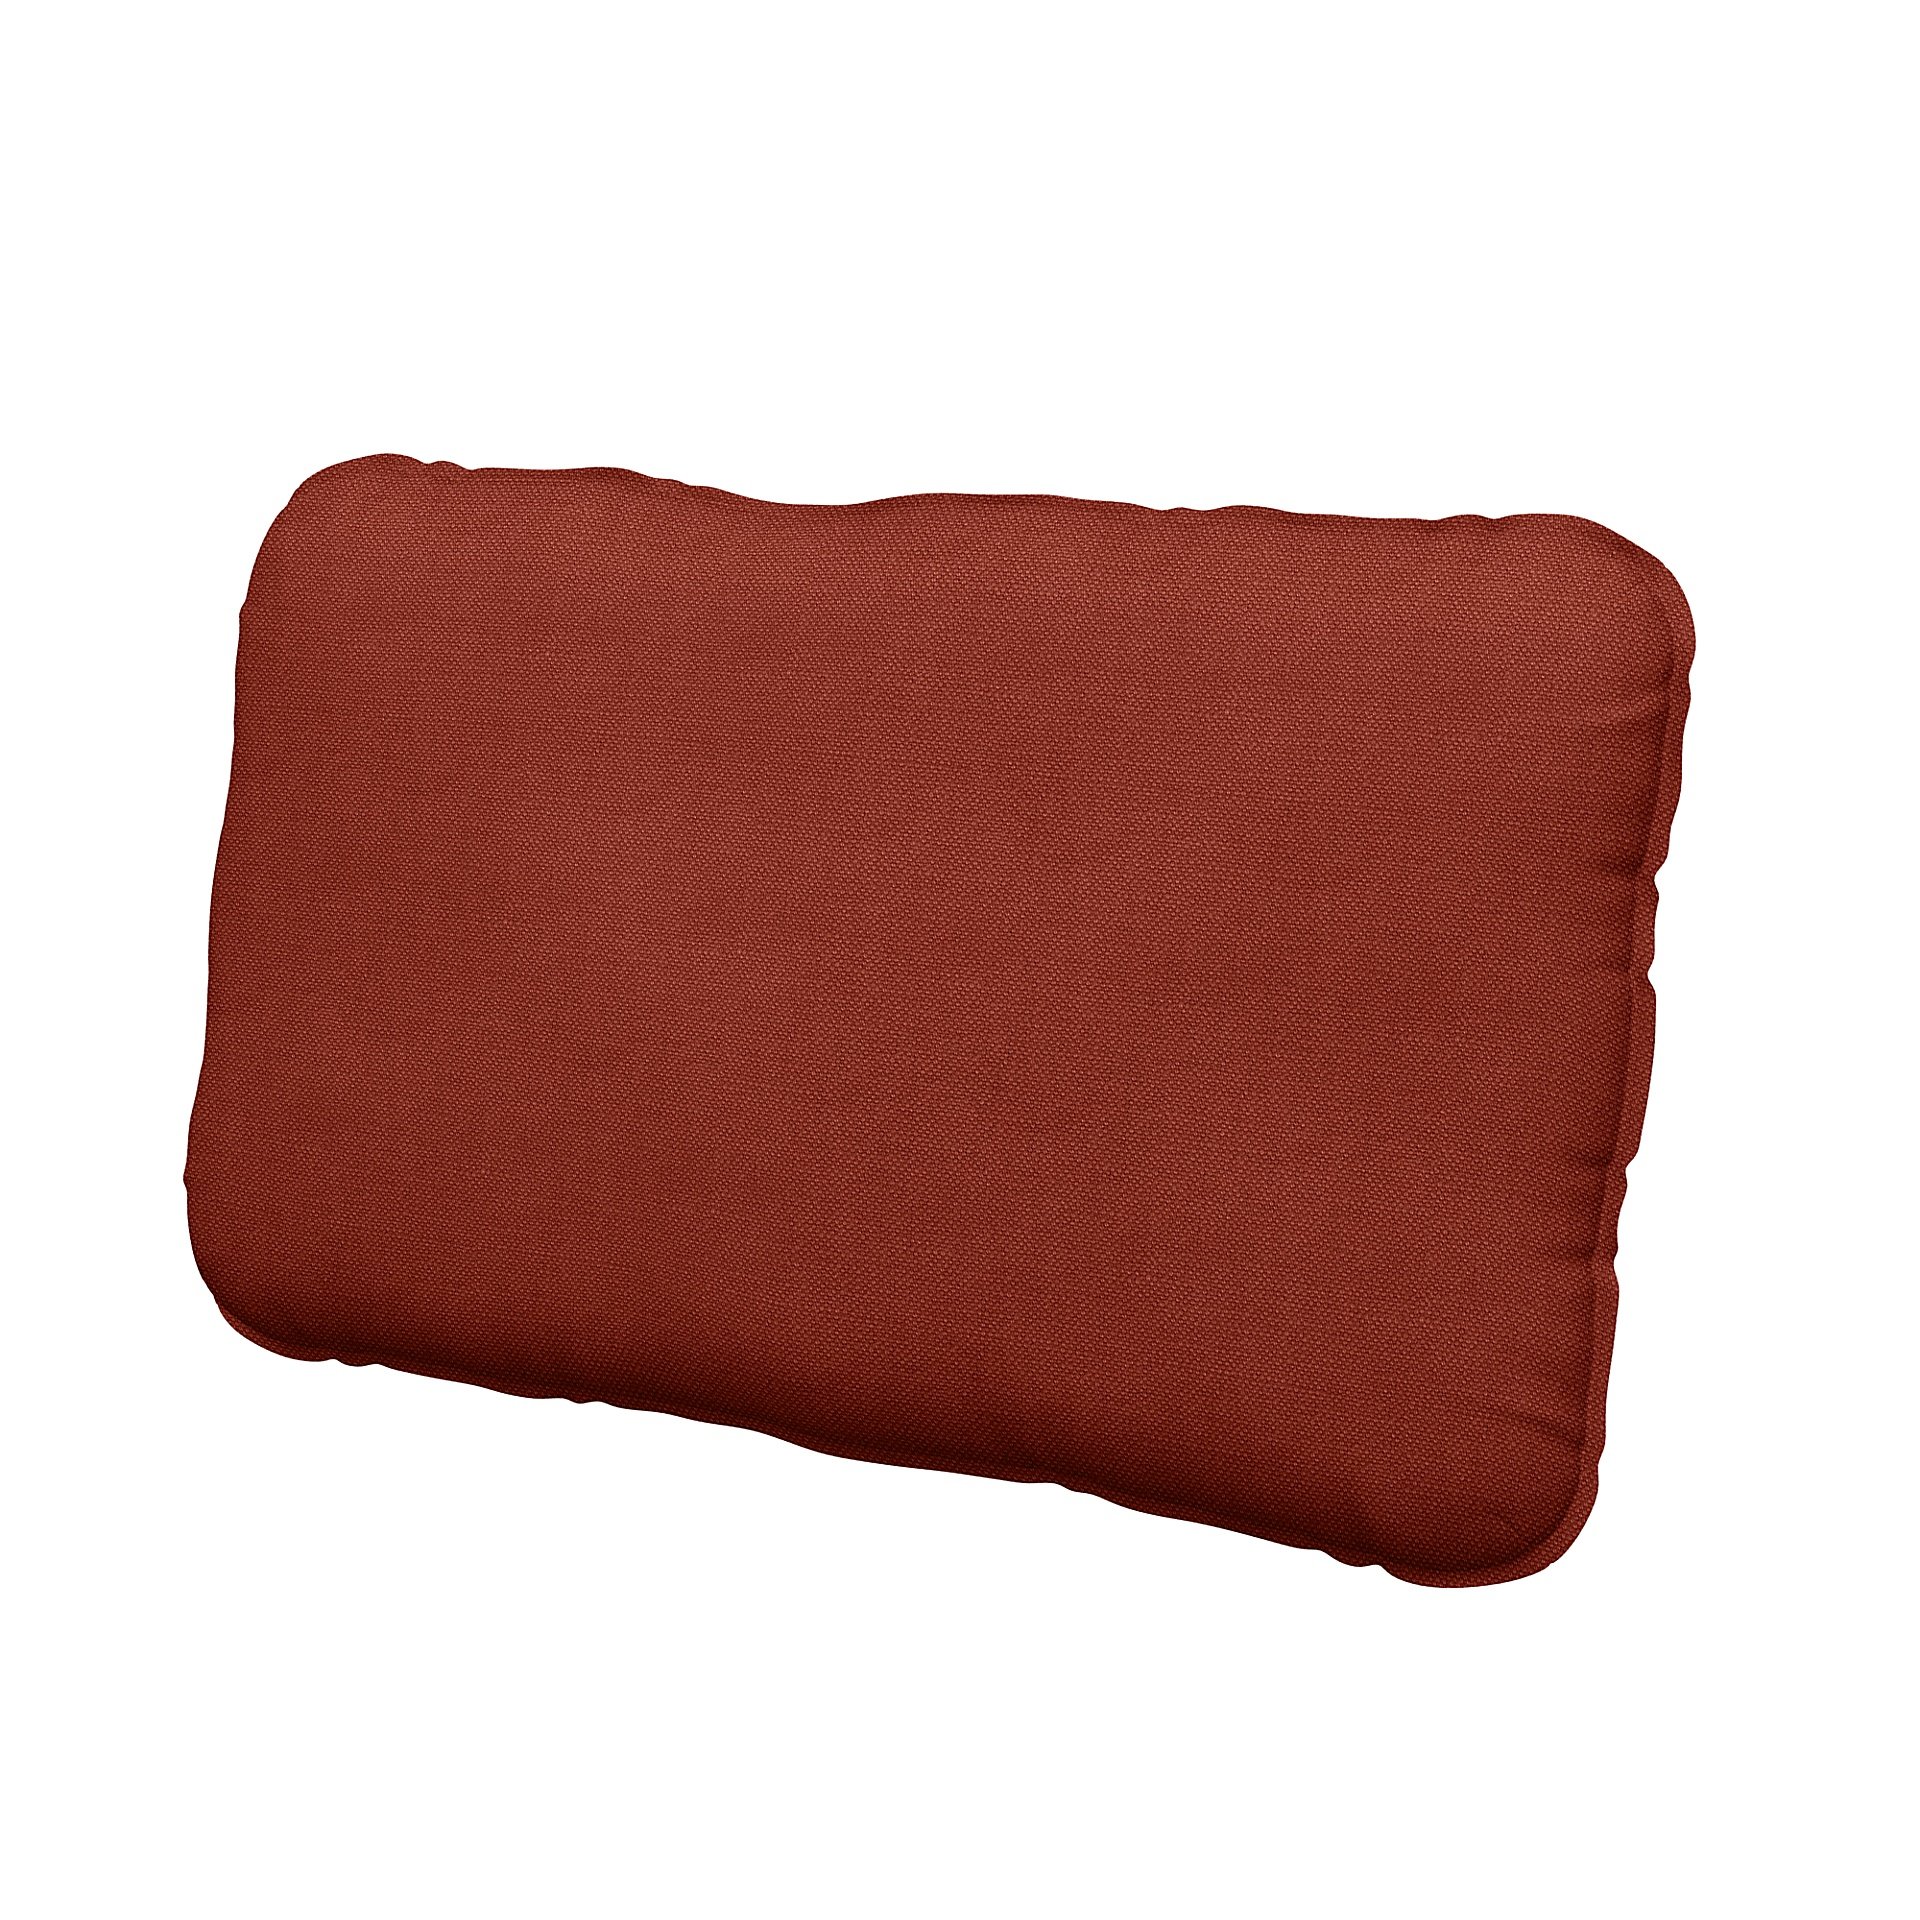 IKEA - Vallentuna back cushion cover 40x75cm, Cayenne, Linen - Bemz